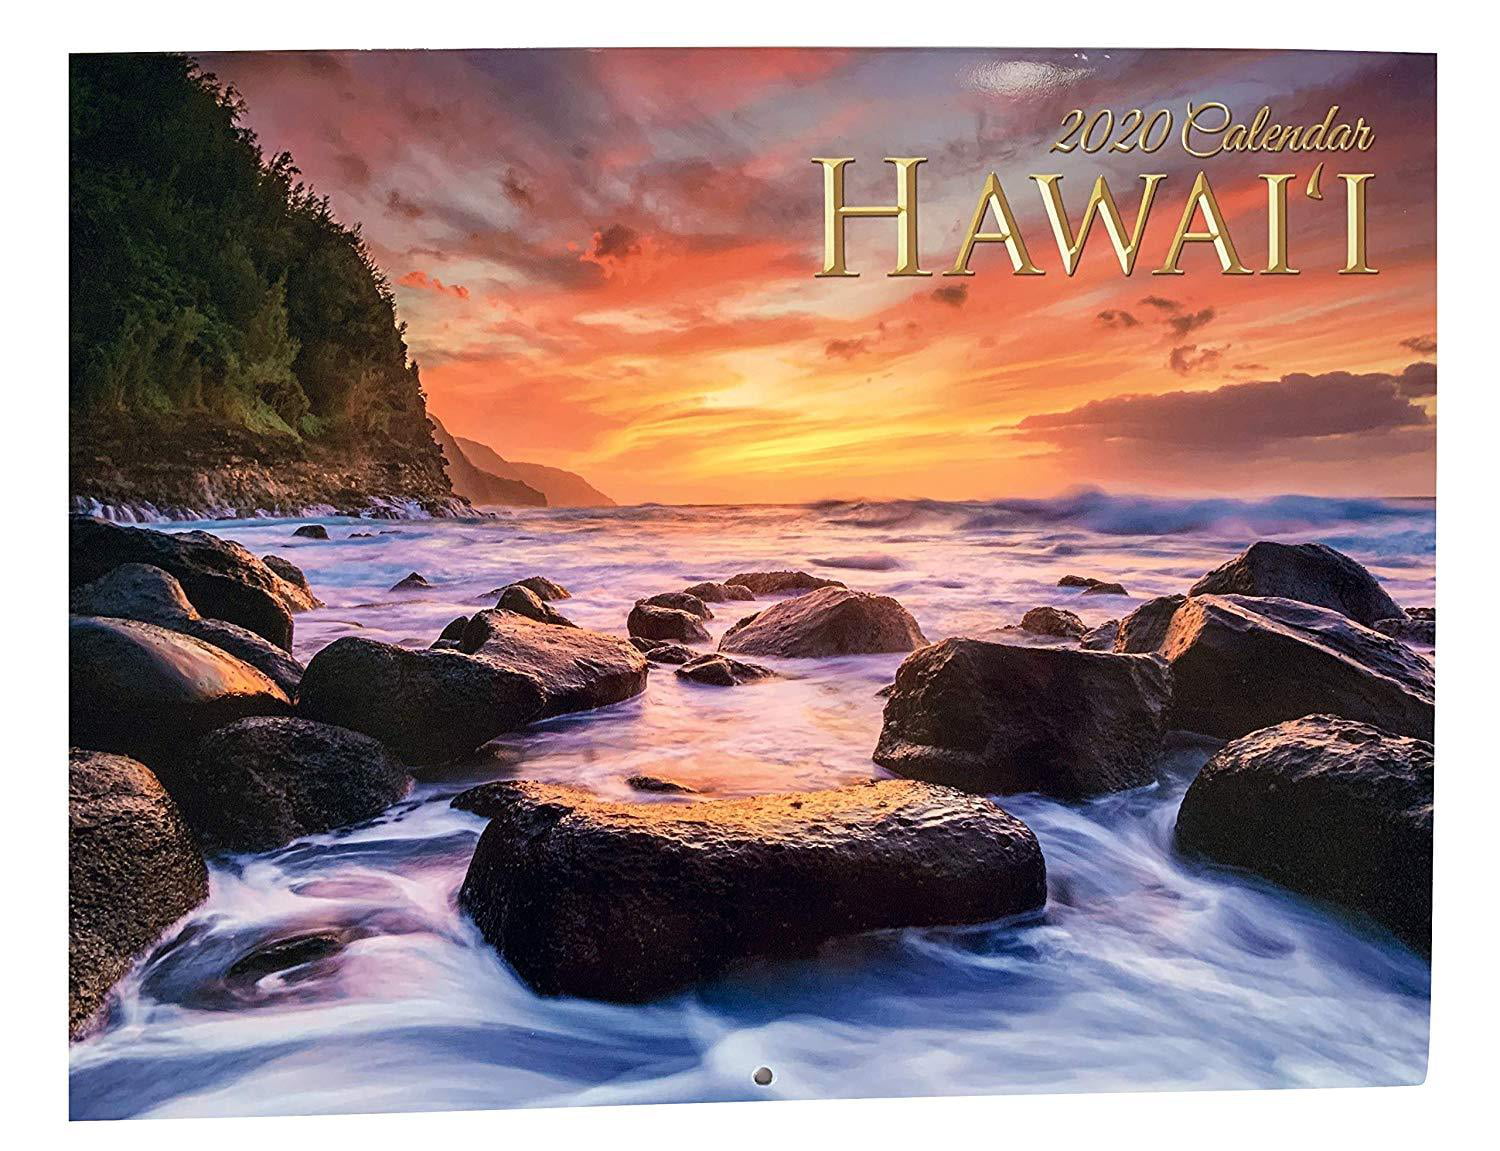 MAUI HAWAII ISLAND 12-Month 2020 Wall Calendar Tropical Beach Ocean From Kona 